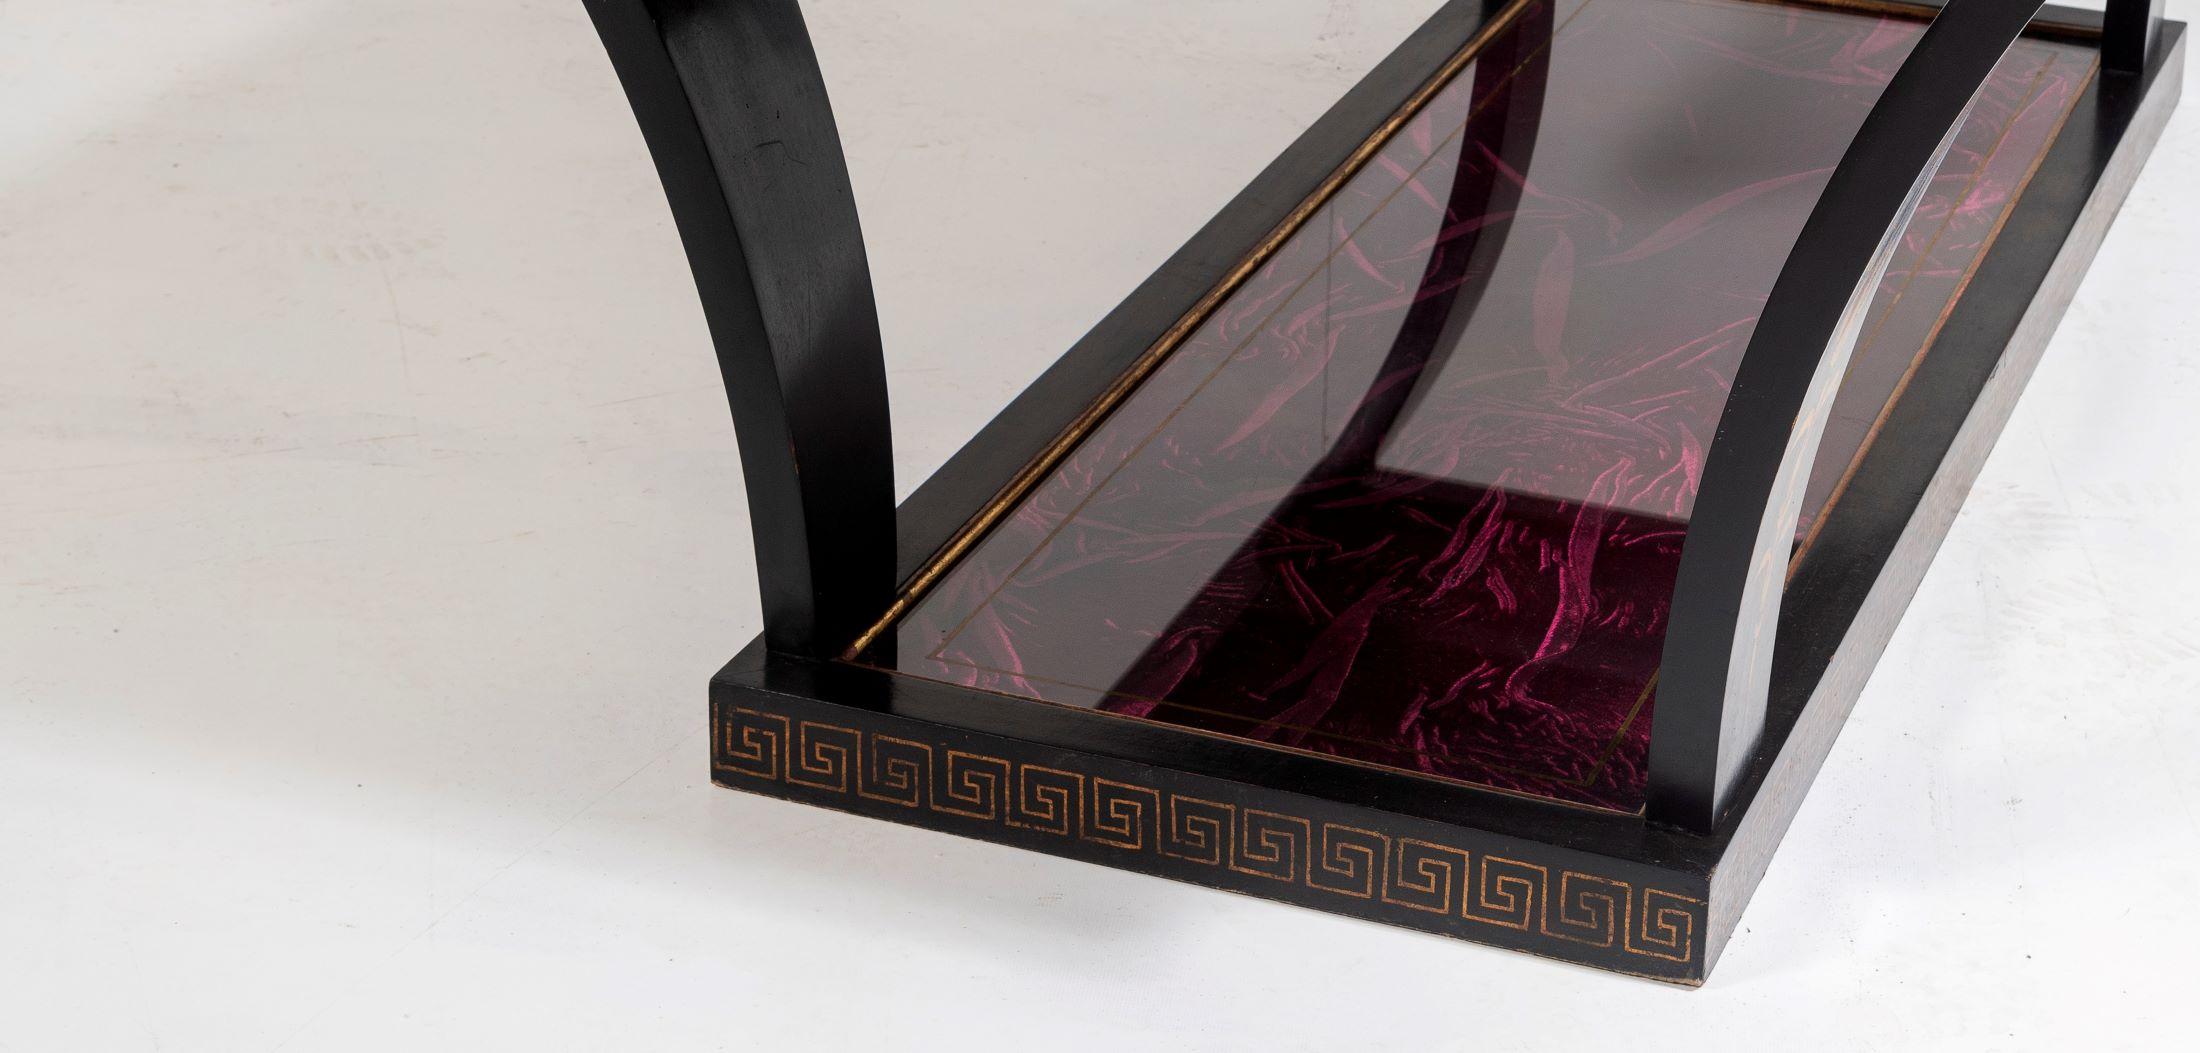 versace glass table